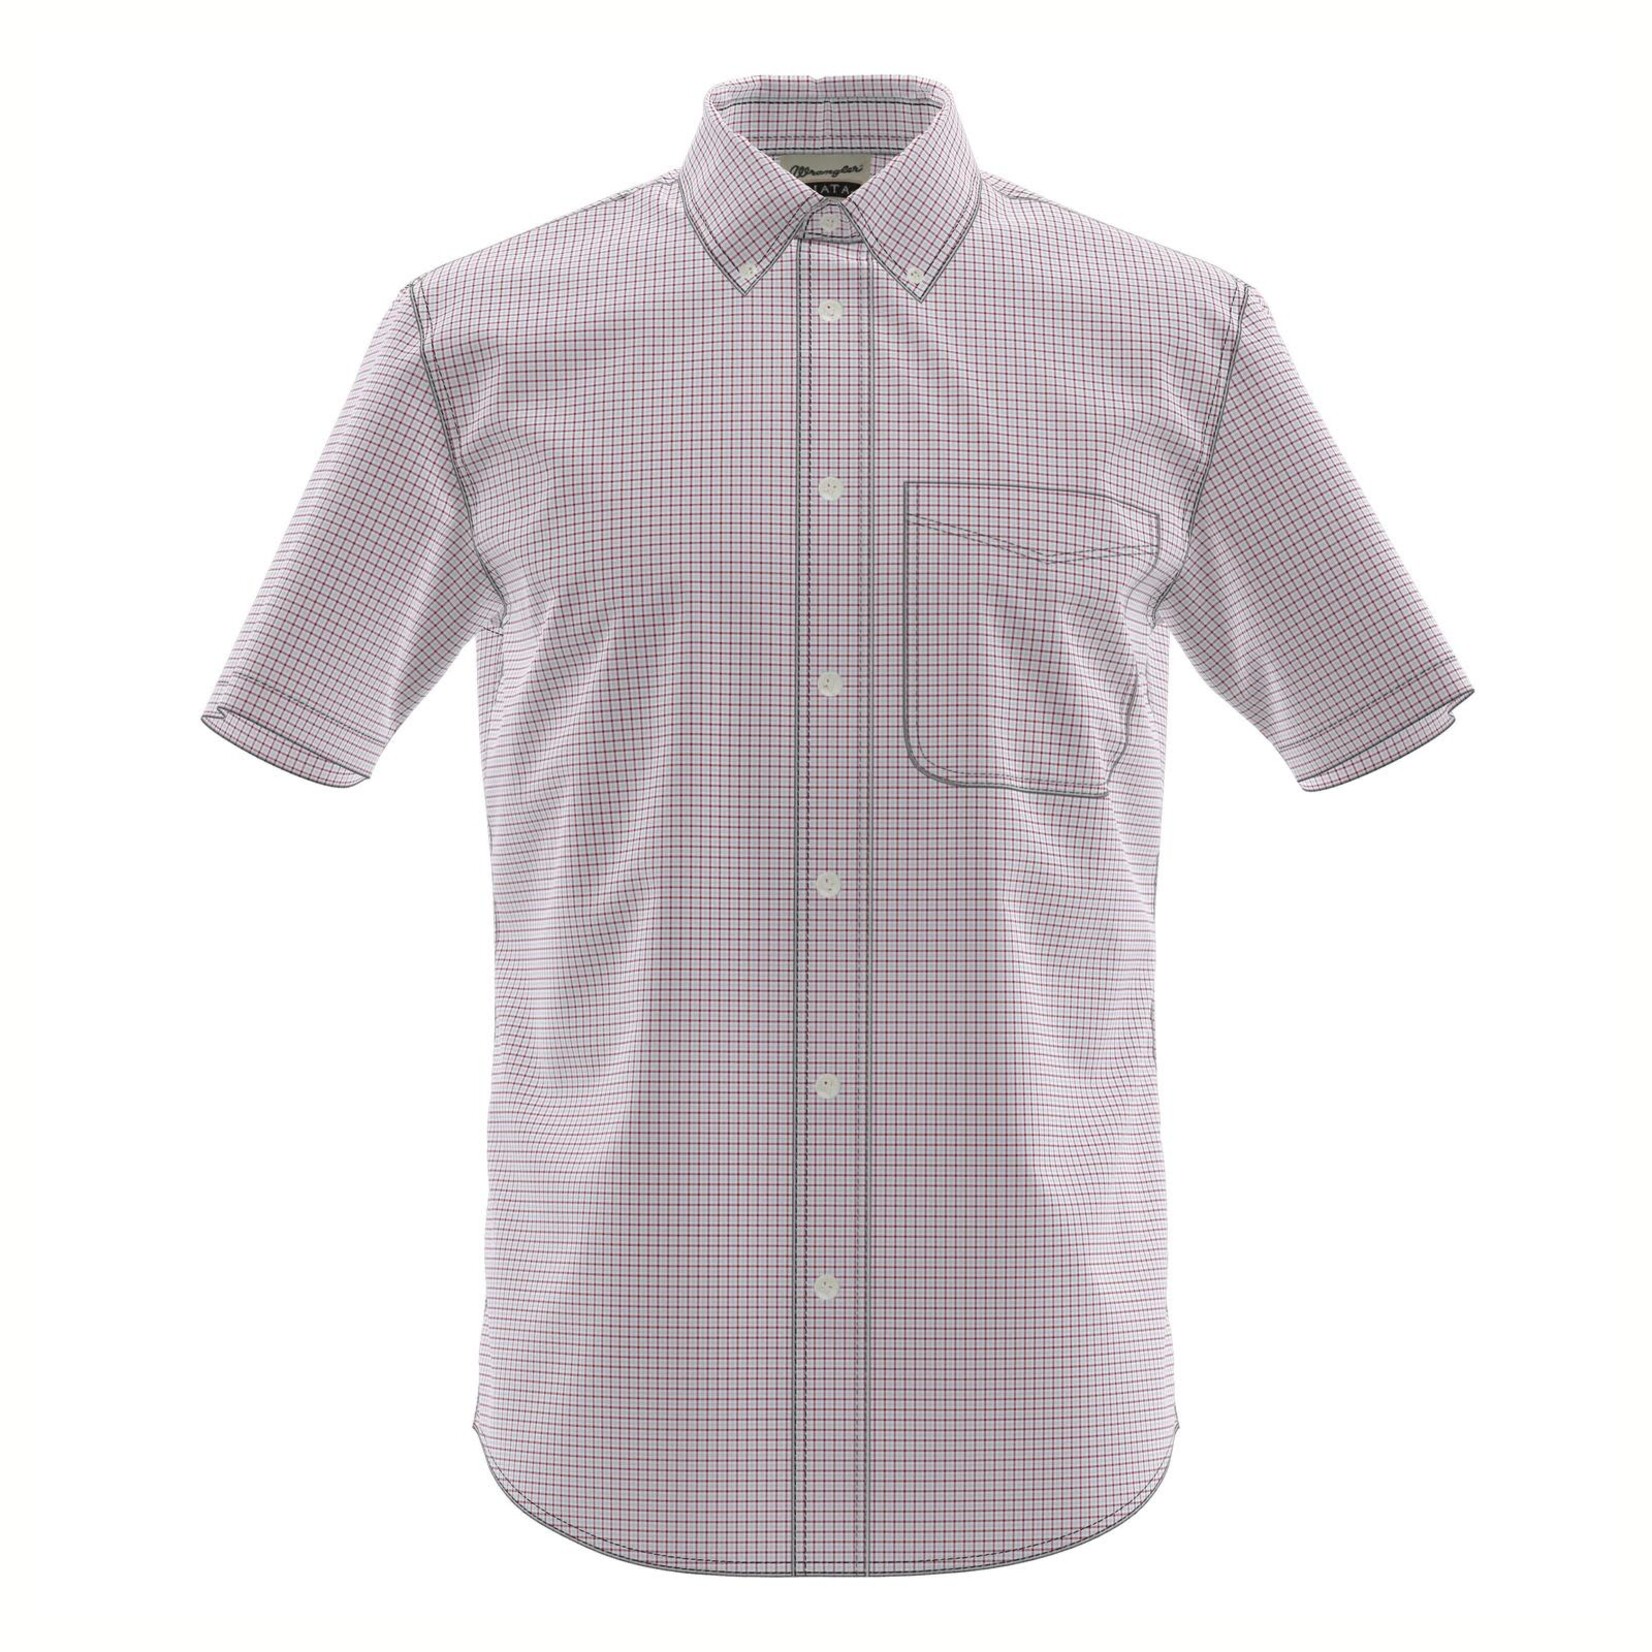 Wrangler Riata® Dress Short Sleeve Shirt - Classic Fit - 112344294